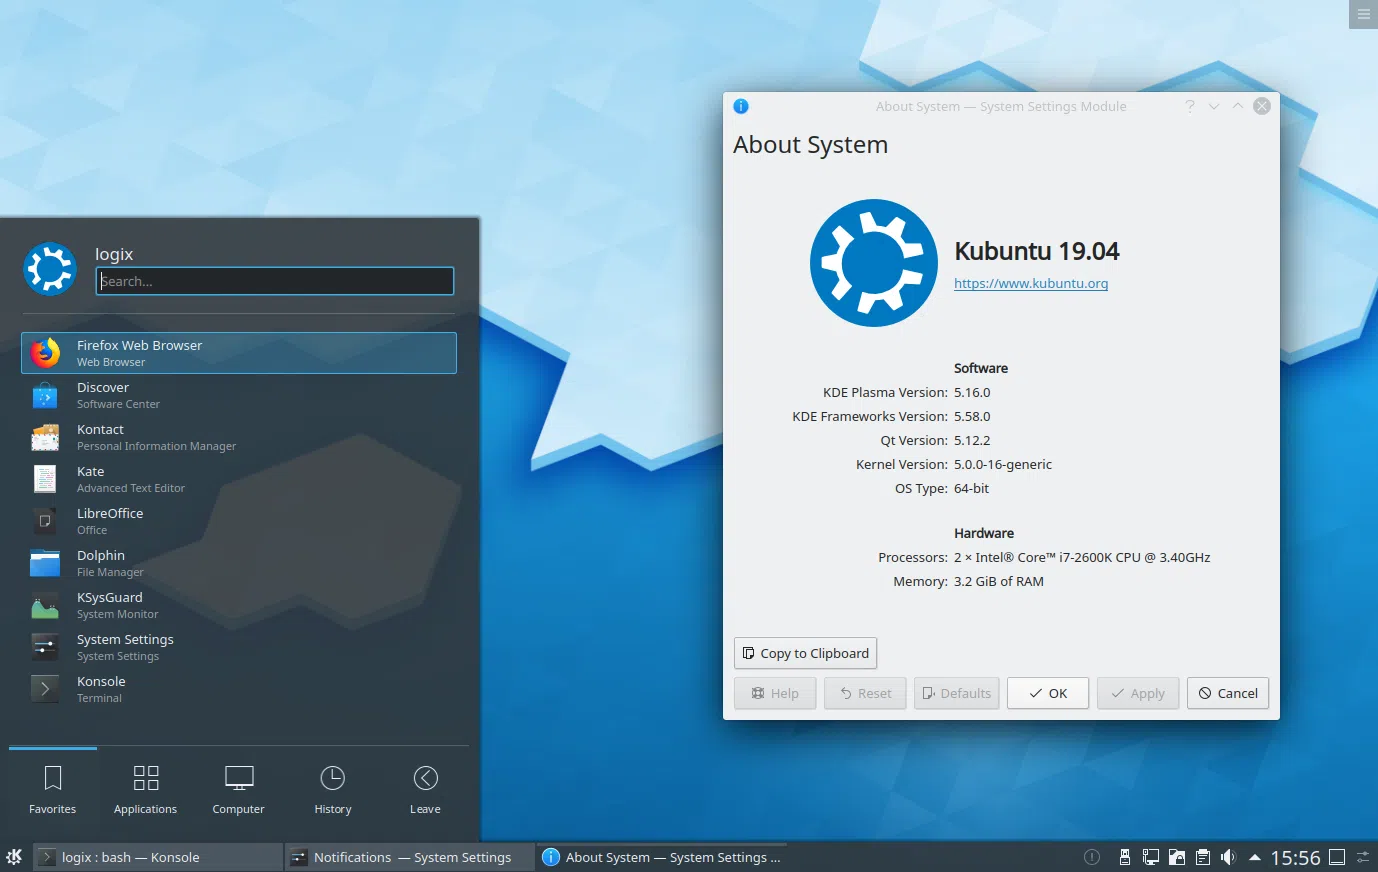 KDE Plasma 5.16 Kubuntu 19.04 Disco Dingo